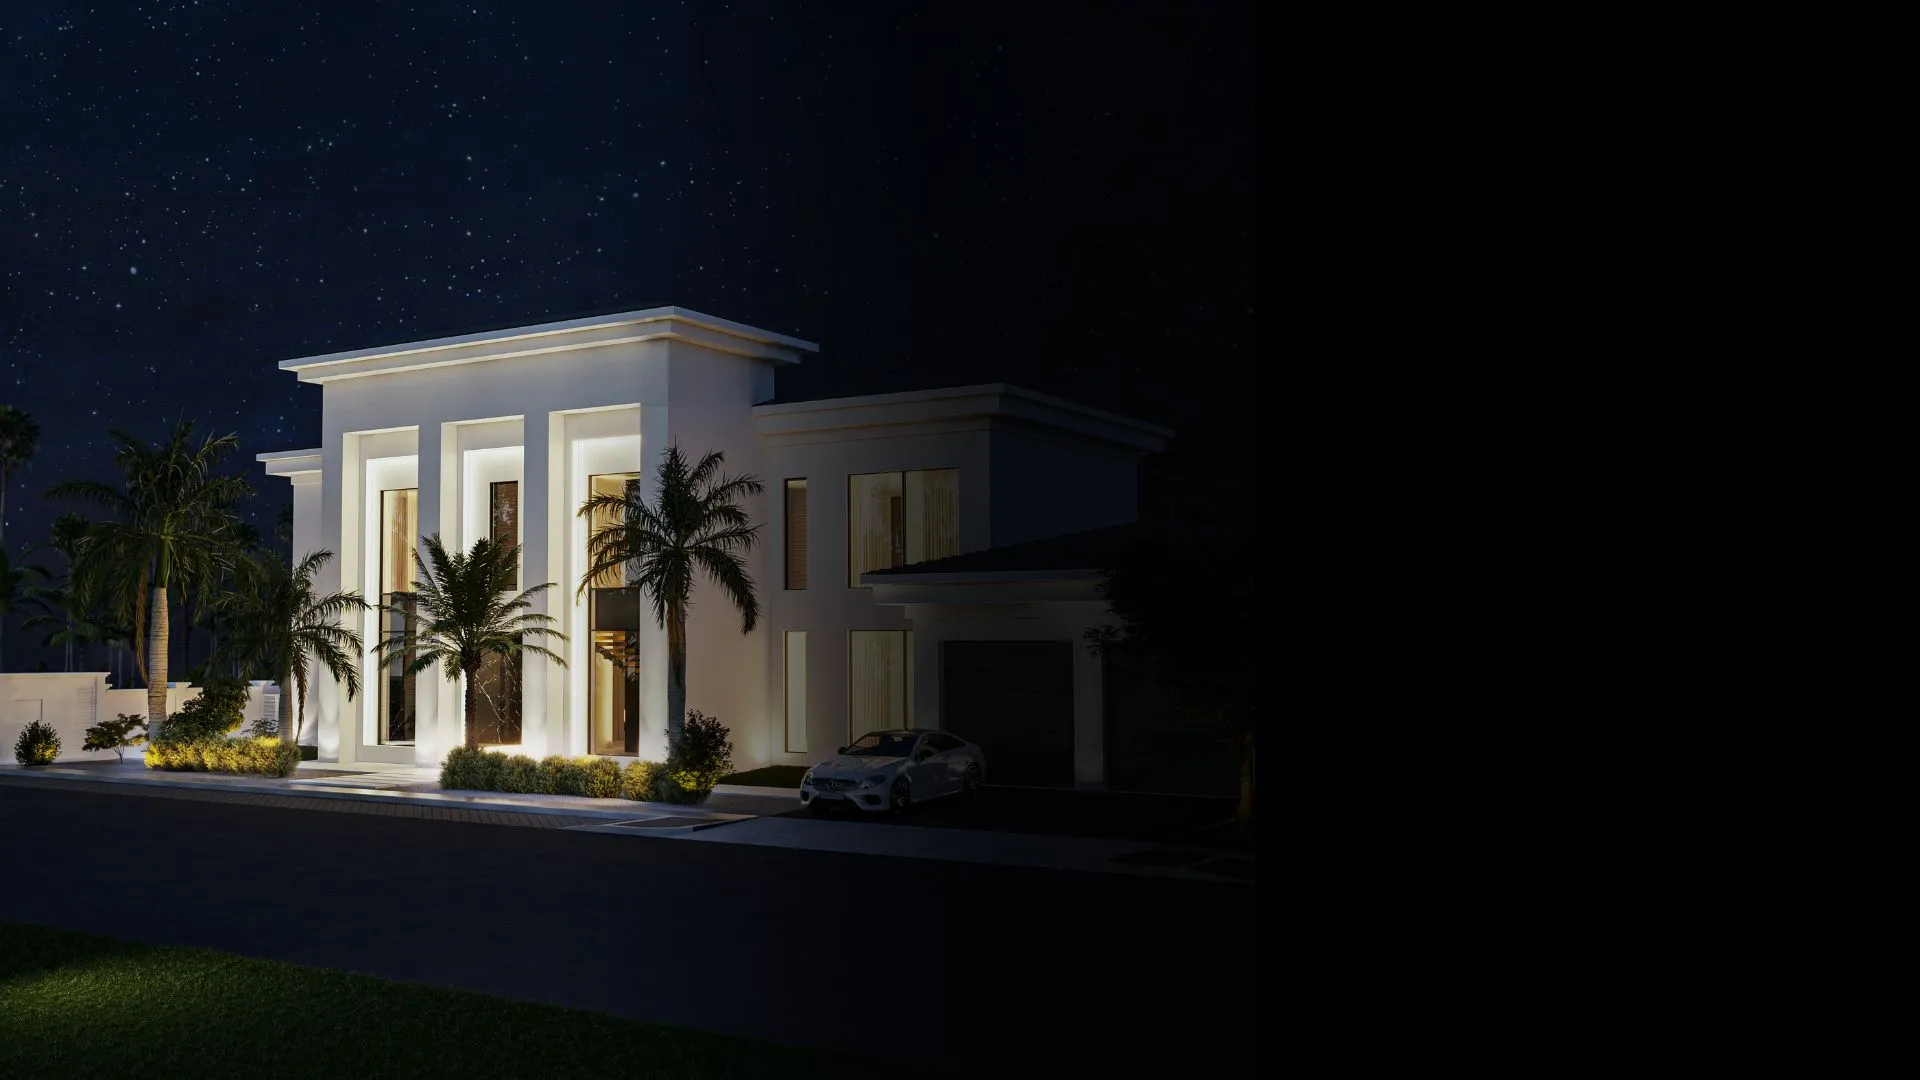 A beautiful modern home illuminated at night, showcasing its sleek design and inviting ambiance.